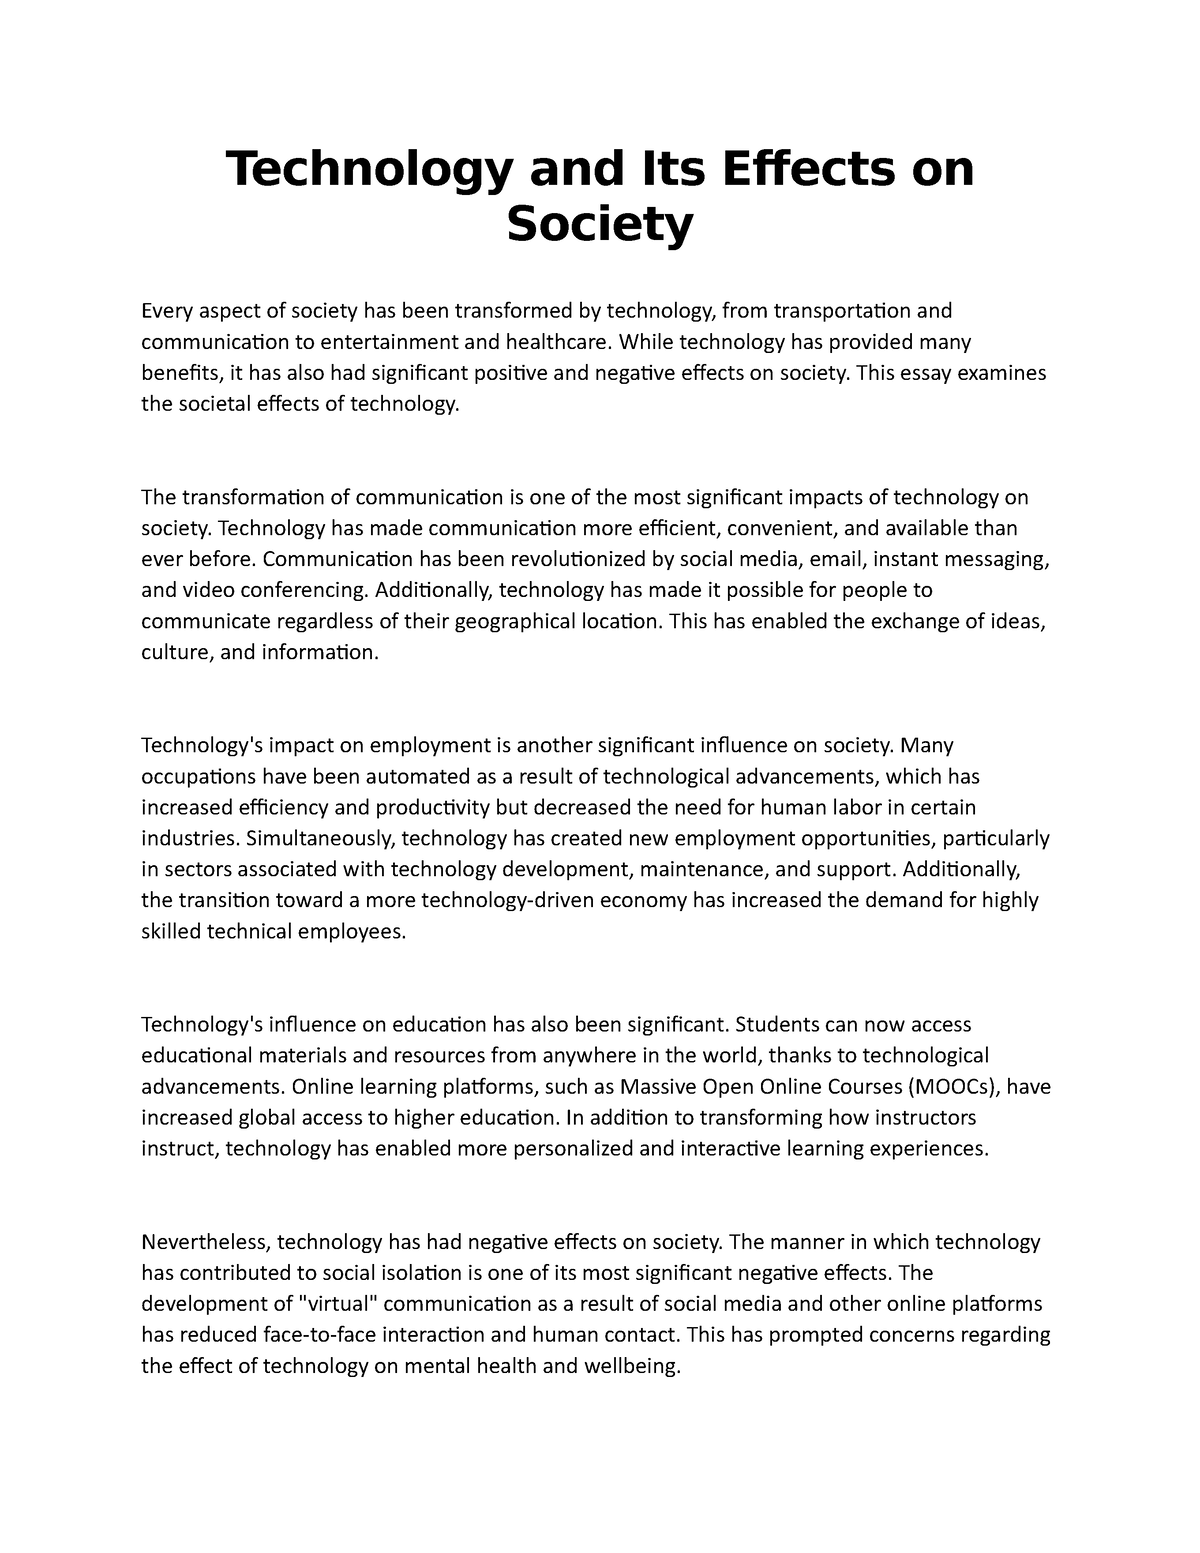 impact of technology on society essay